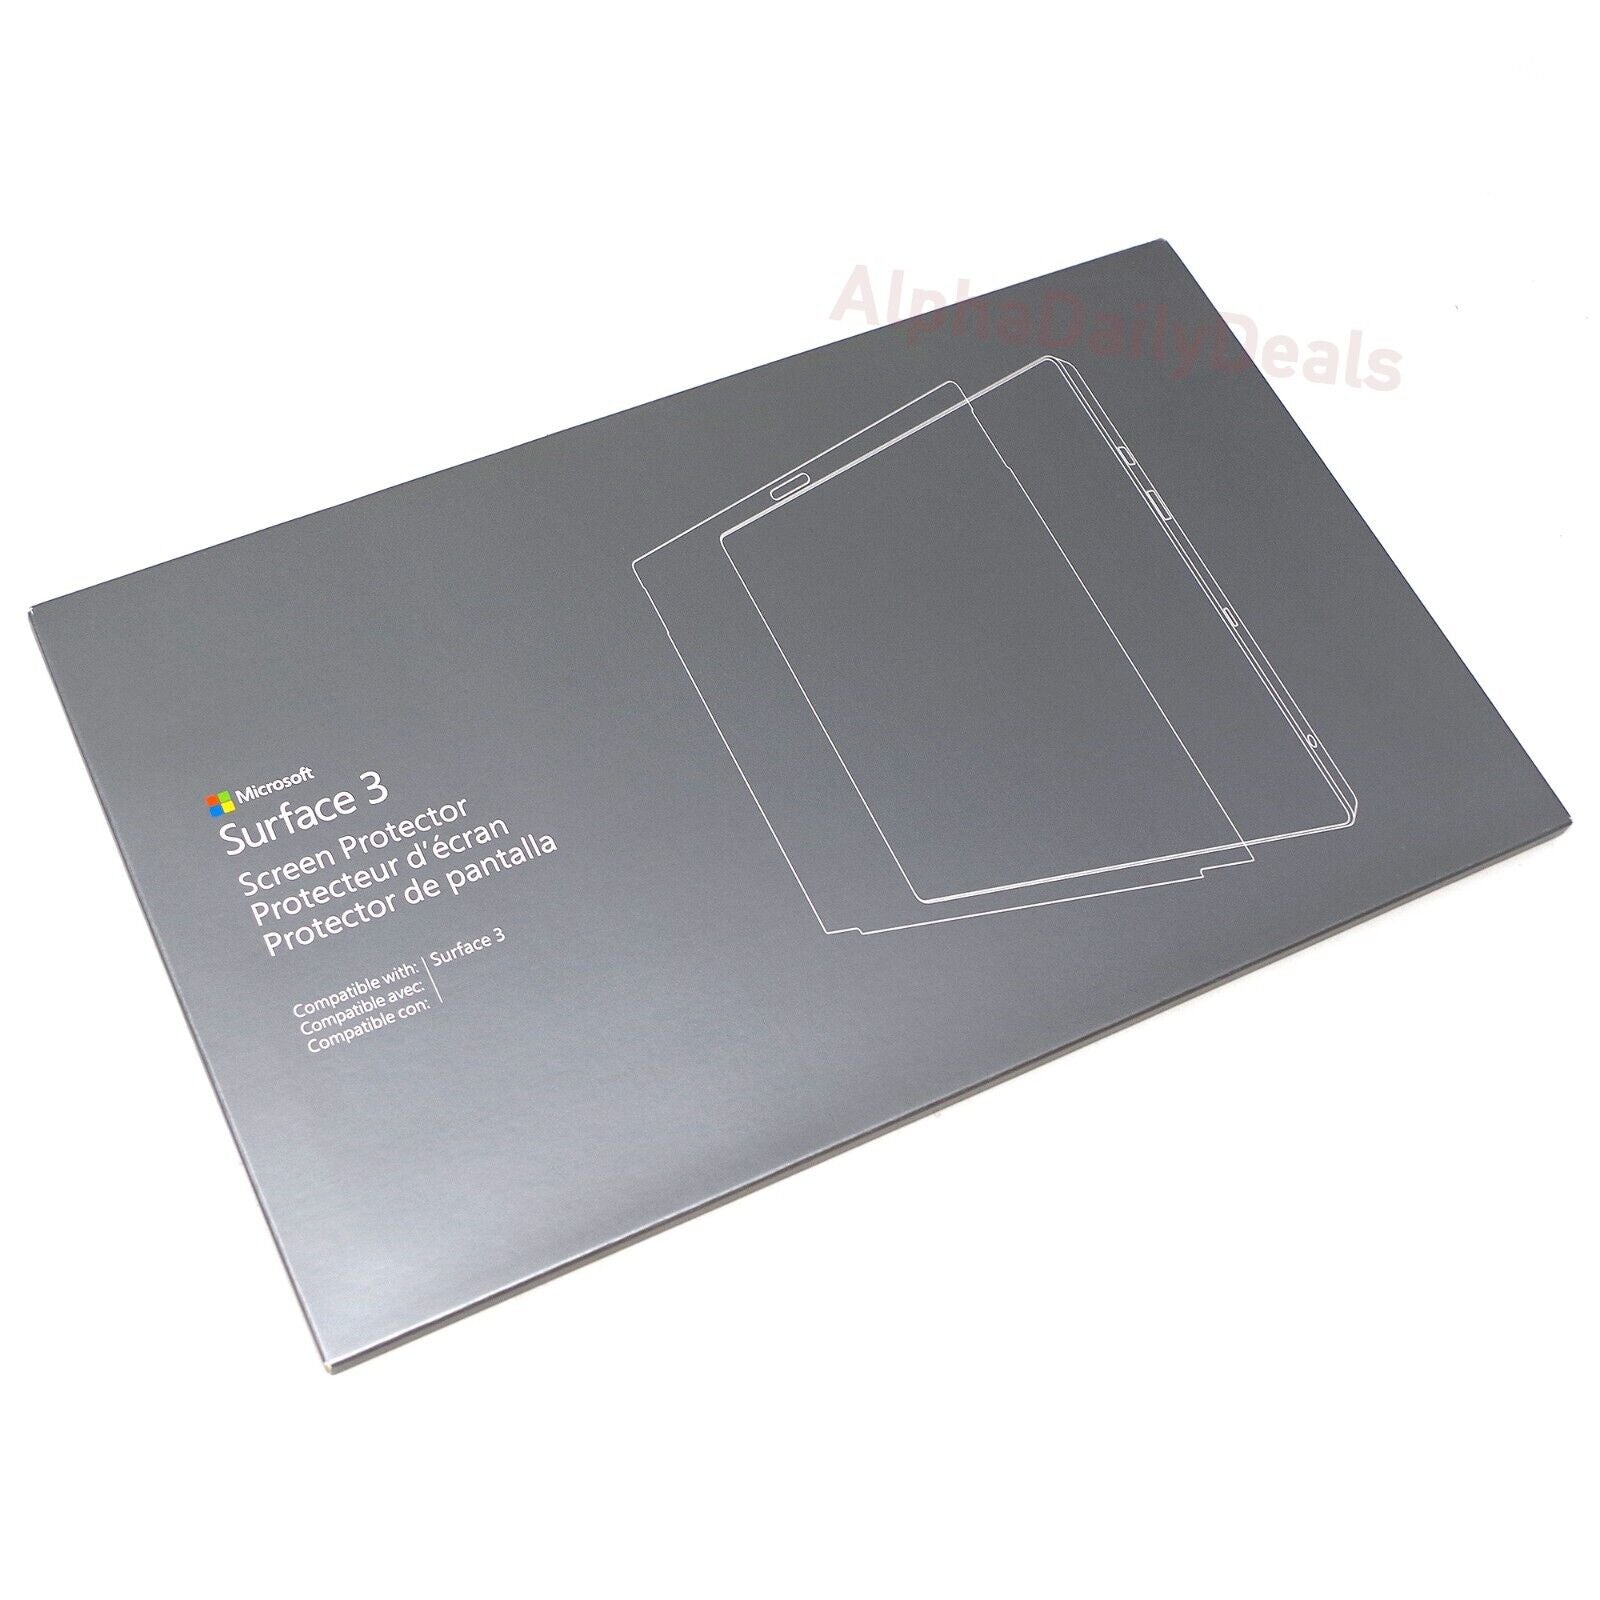 Original OEM Microsoft Surface 3 Tempered Glass Screen Protector